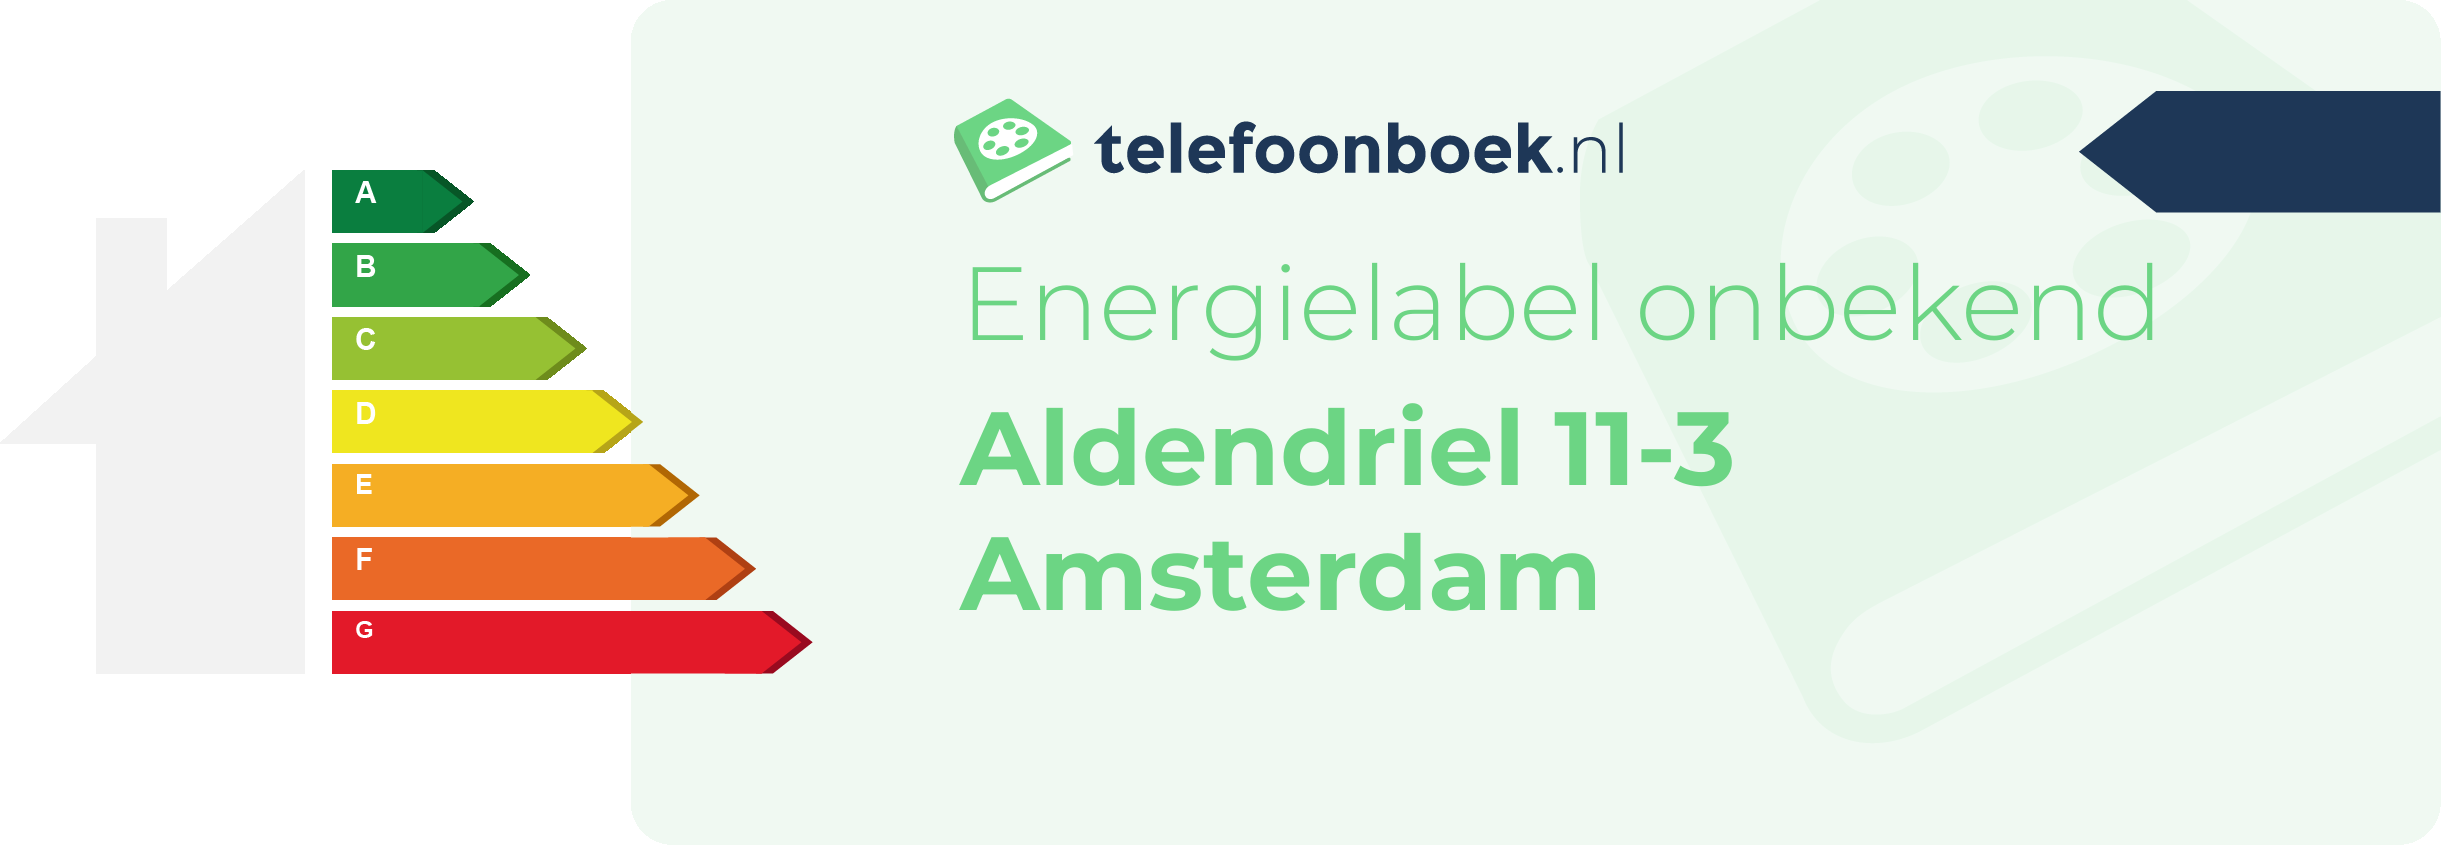 Energielabel Aldendriel 11-3 Amsterdam